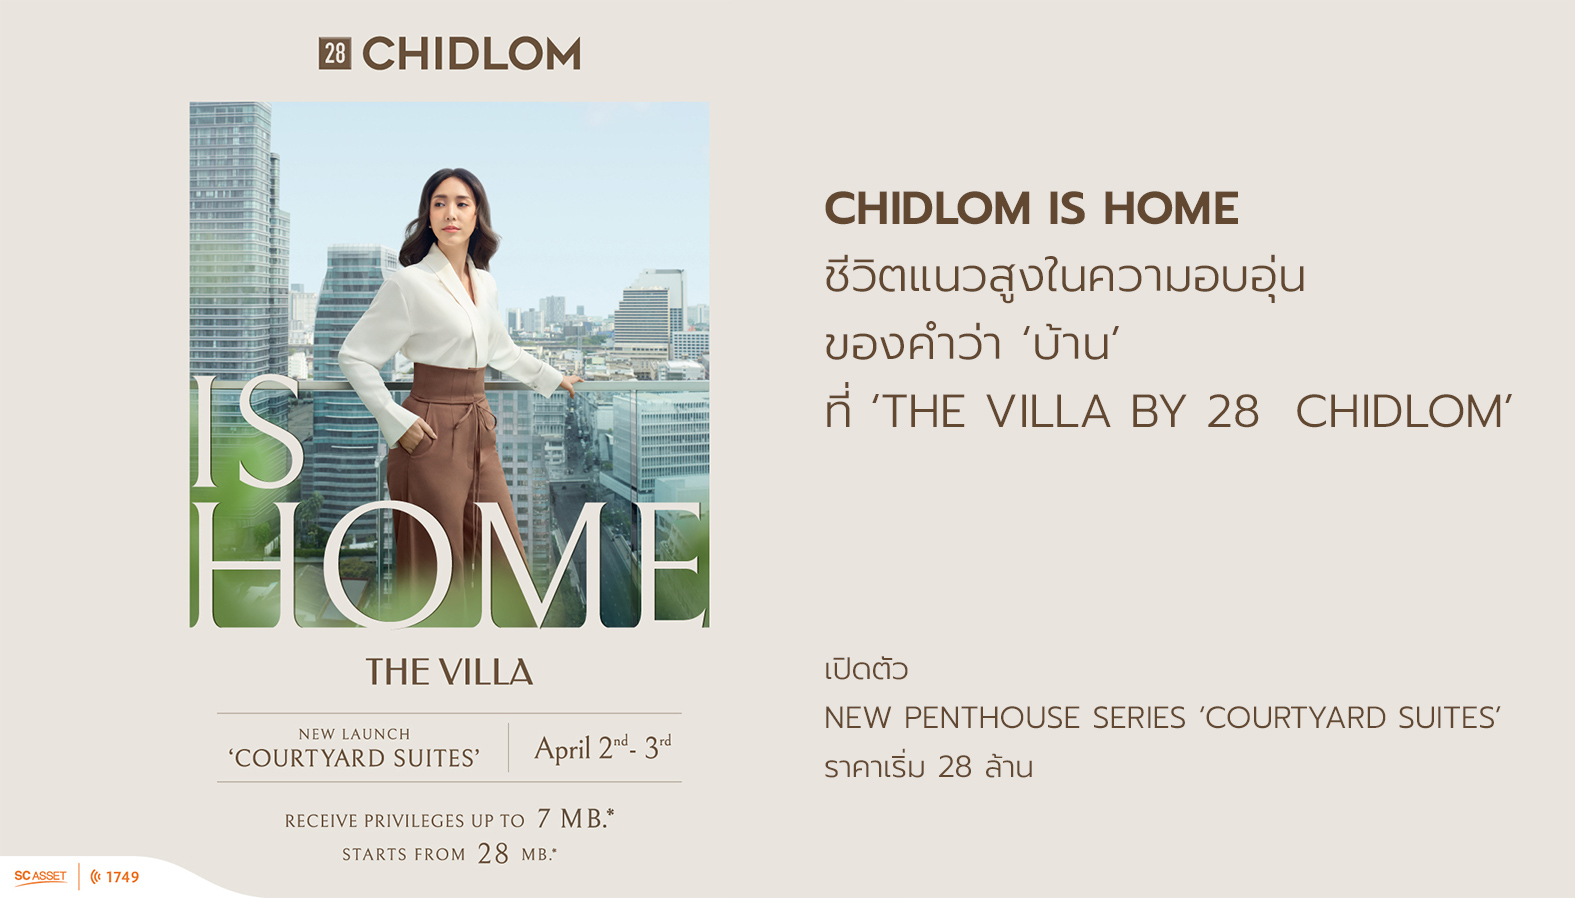 CHIDLOM IS HOME ชีวิตแนวสูงในความอบอุ่นของคำว่า ‘บ้าน’ ที่ ‘The Villa by 28  CHIDLOM’   เปิดตัว New Penthouse Series ‘Courtyard Suites’ ราคาเริ่ม 28 ล้าน